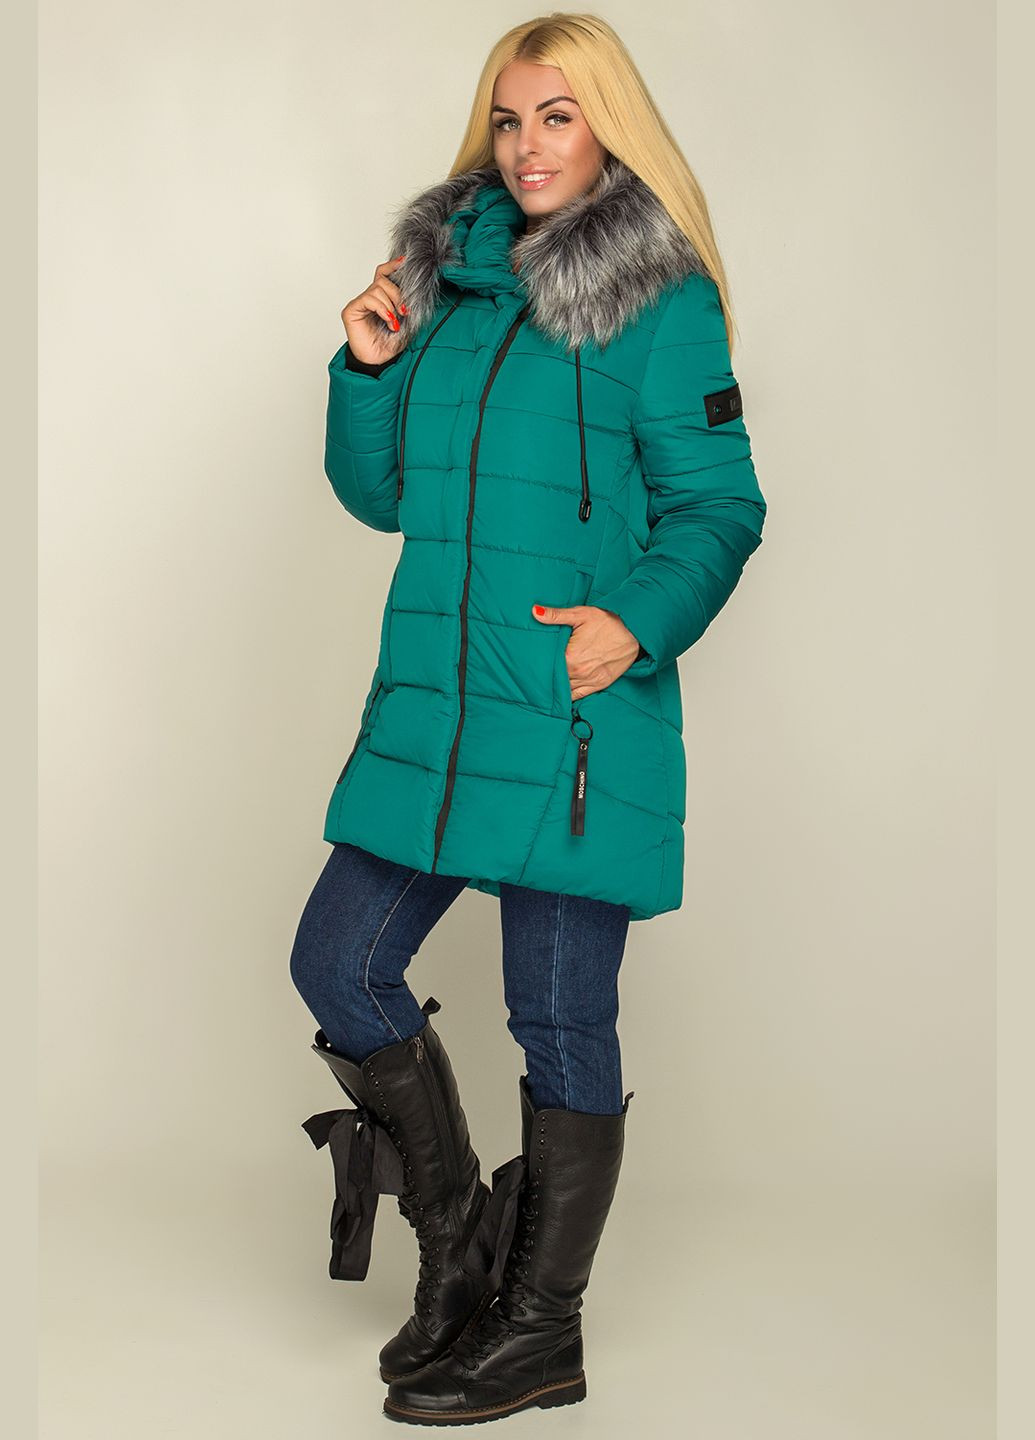 Изумрудная зимняя зимняя куртка simona изумруд MioRichi